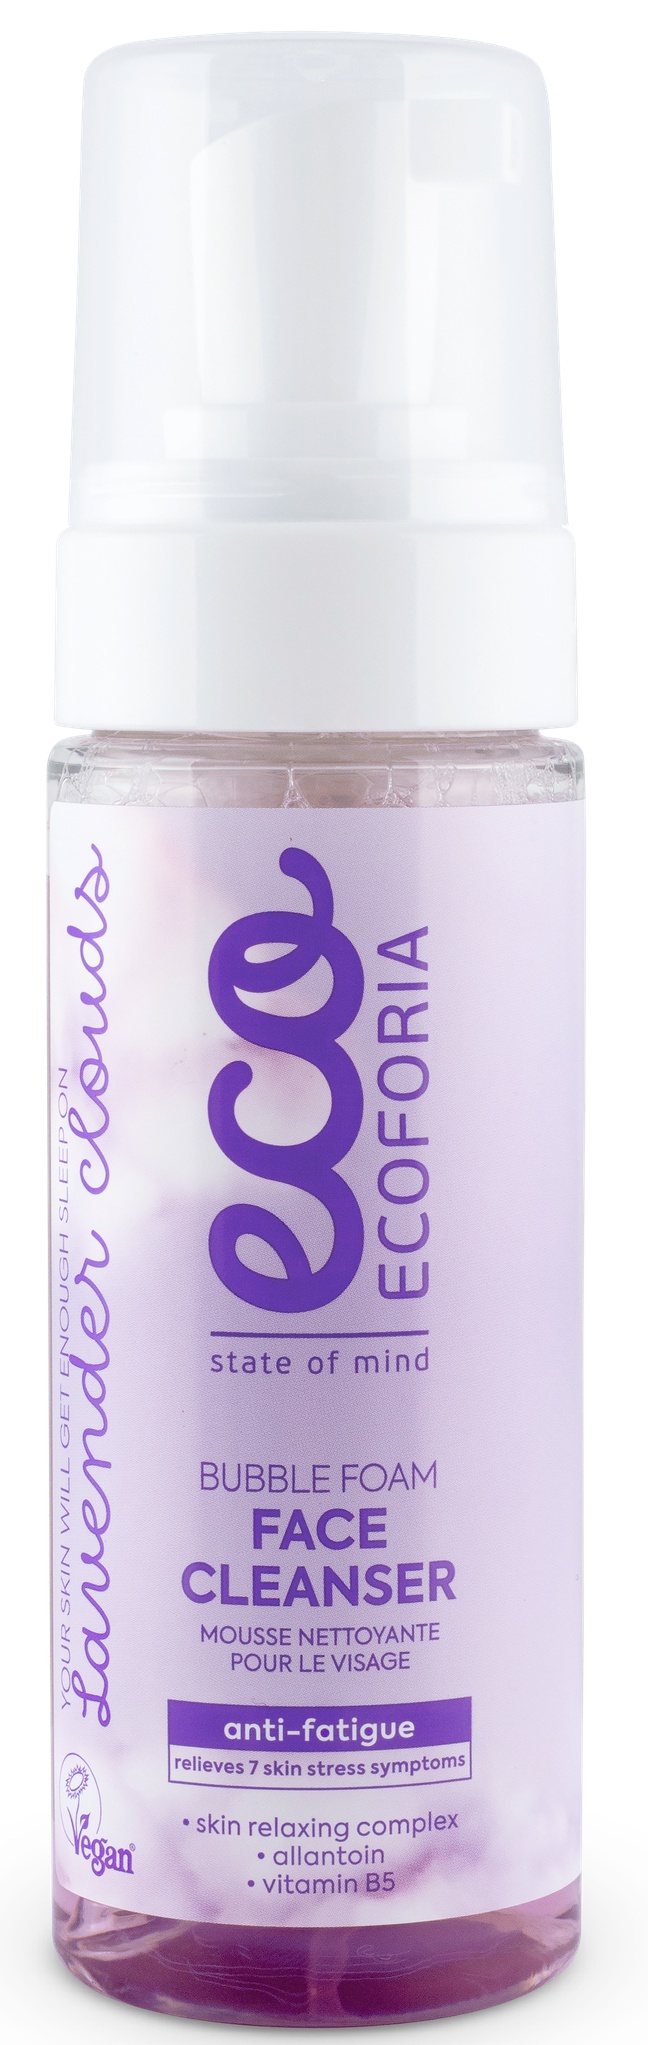 Ecoforia Bubble Foam Face Cleanser